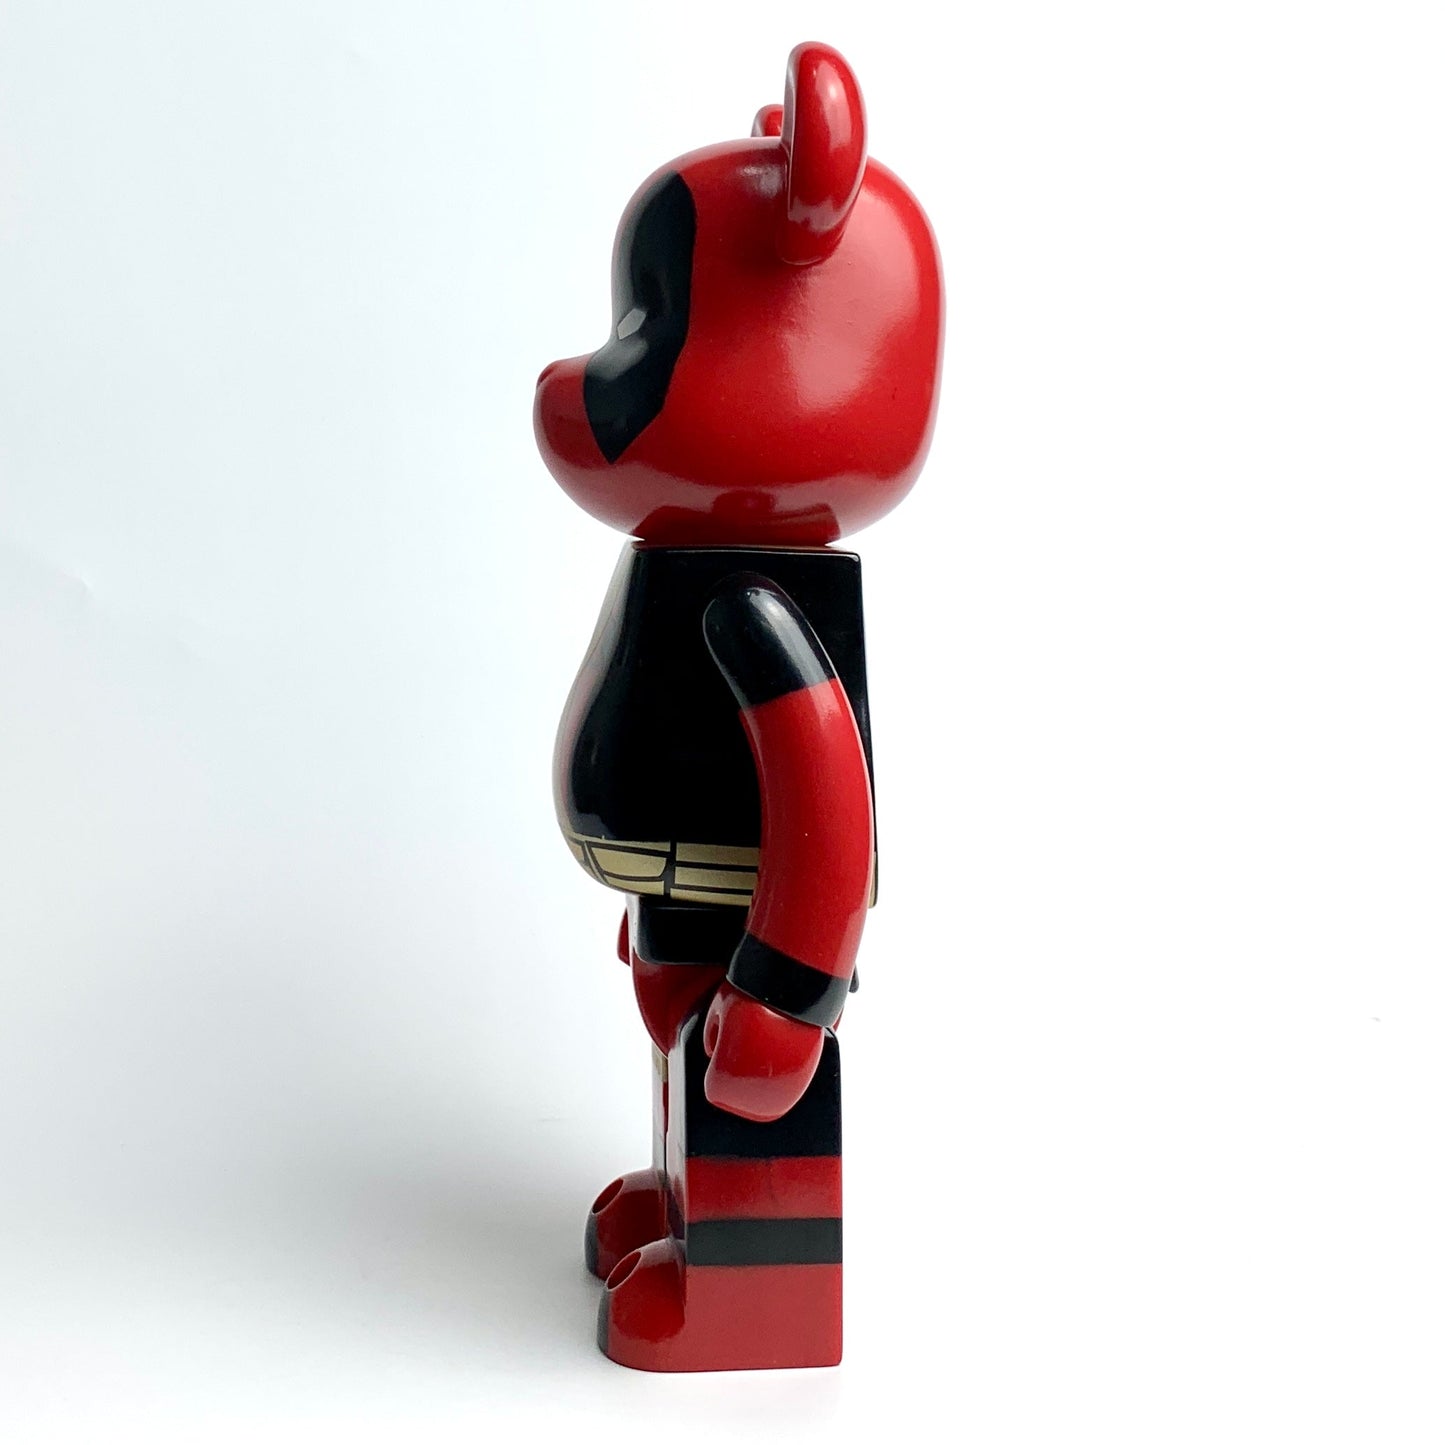 Hobby - 28cm BE@RBRICK 400% Deadpool Action Figure Boxed